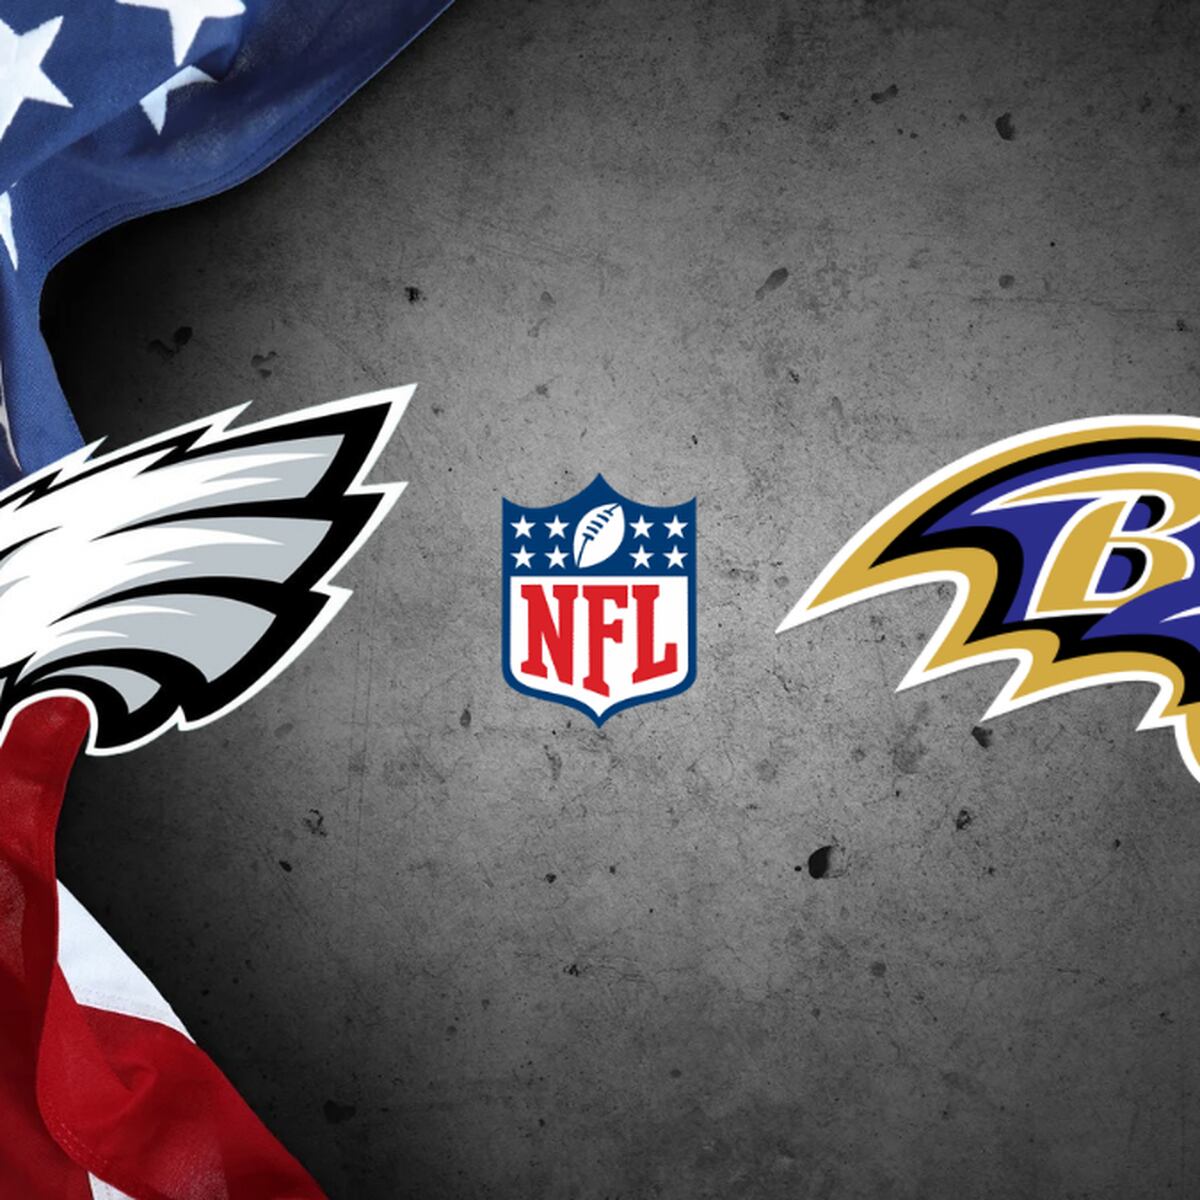 How to watch today's Philadelphia Eagles vs. Baltimore Ravens NFL